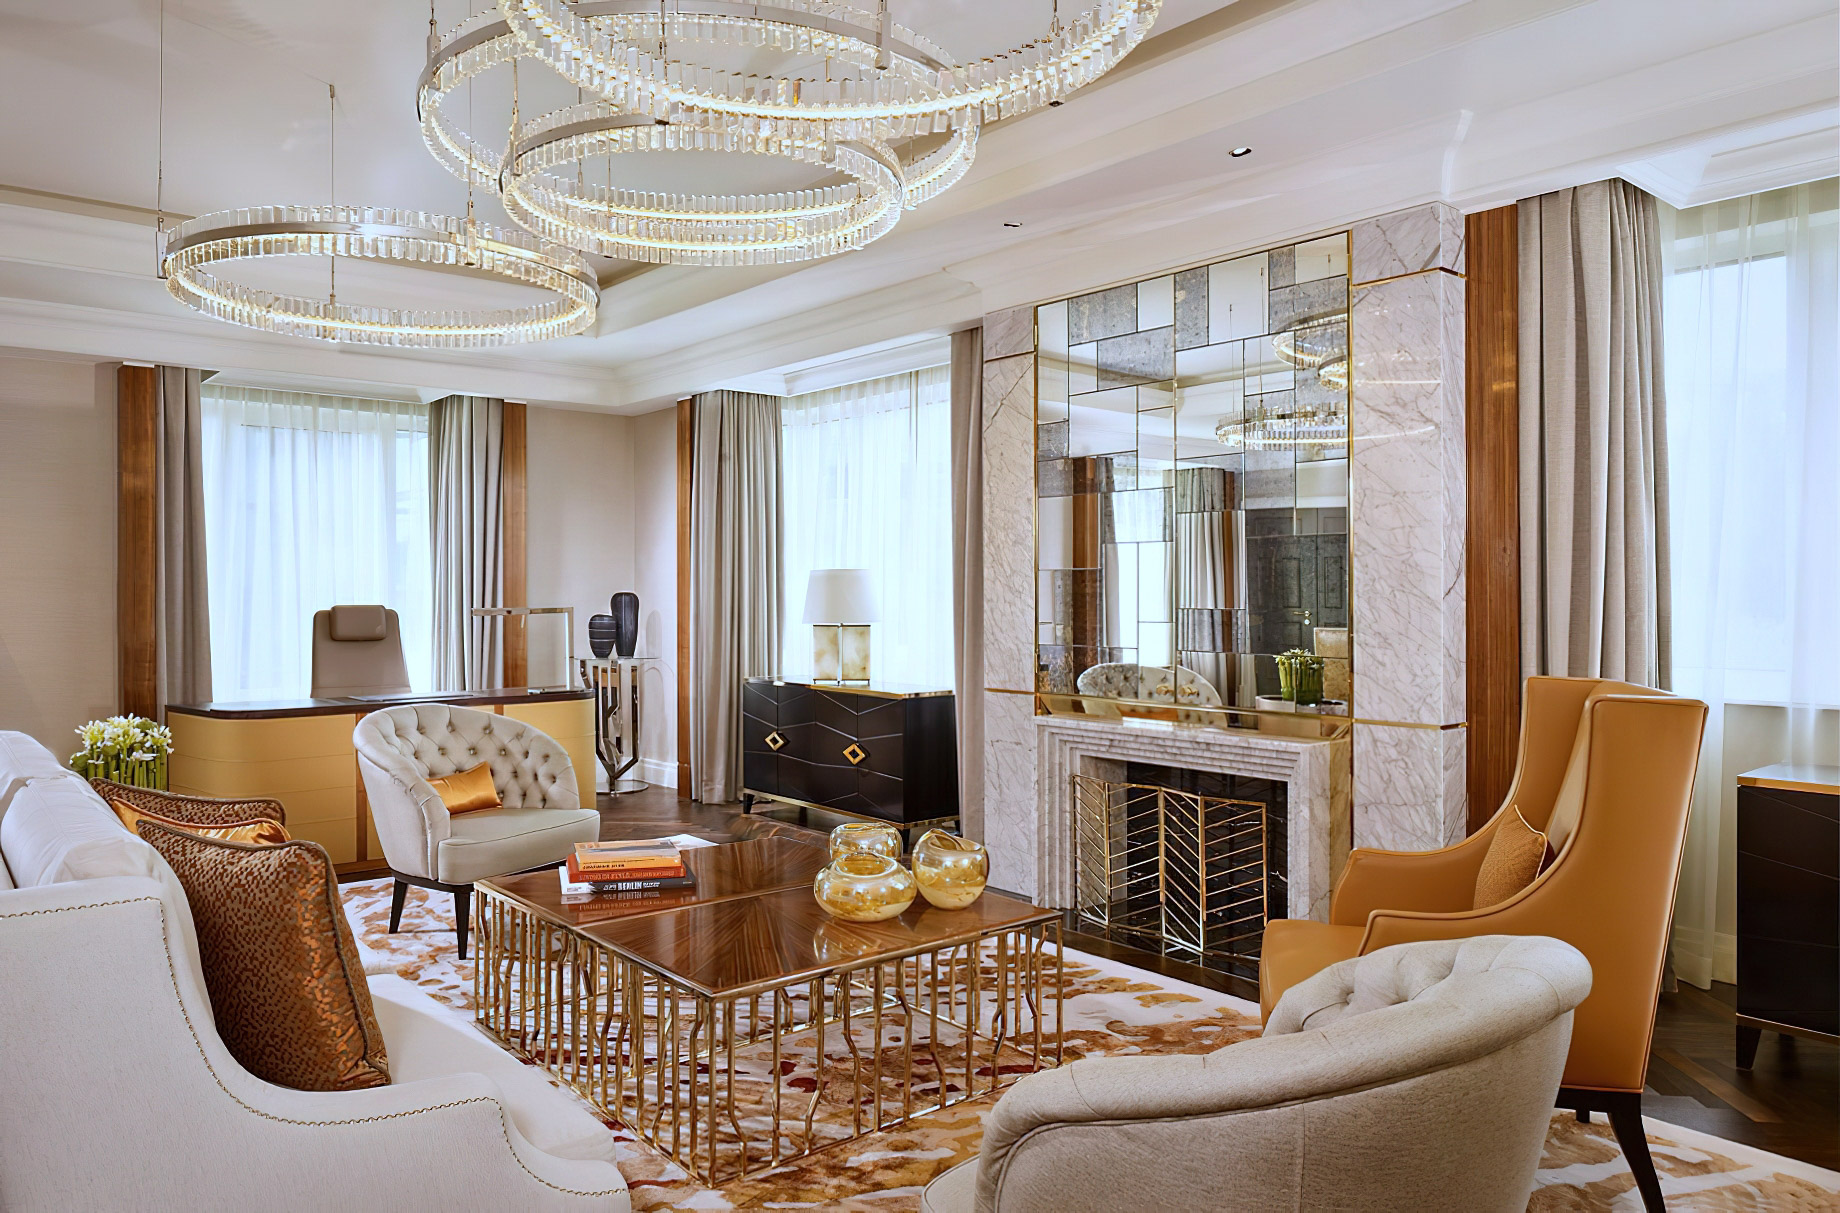 The Ritz-Carlton, Berlin Hotel – Berlin, Germany – The Ritz-Carlton Suite Interior